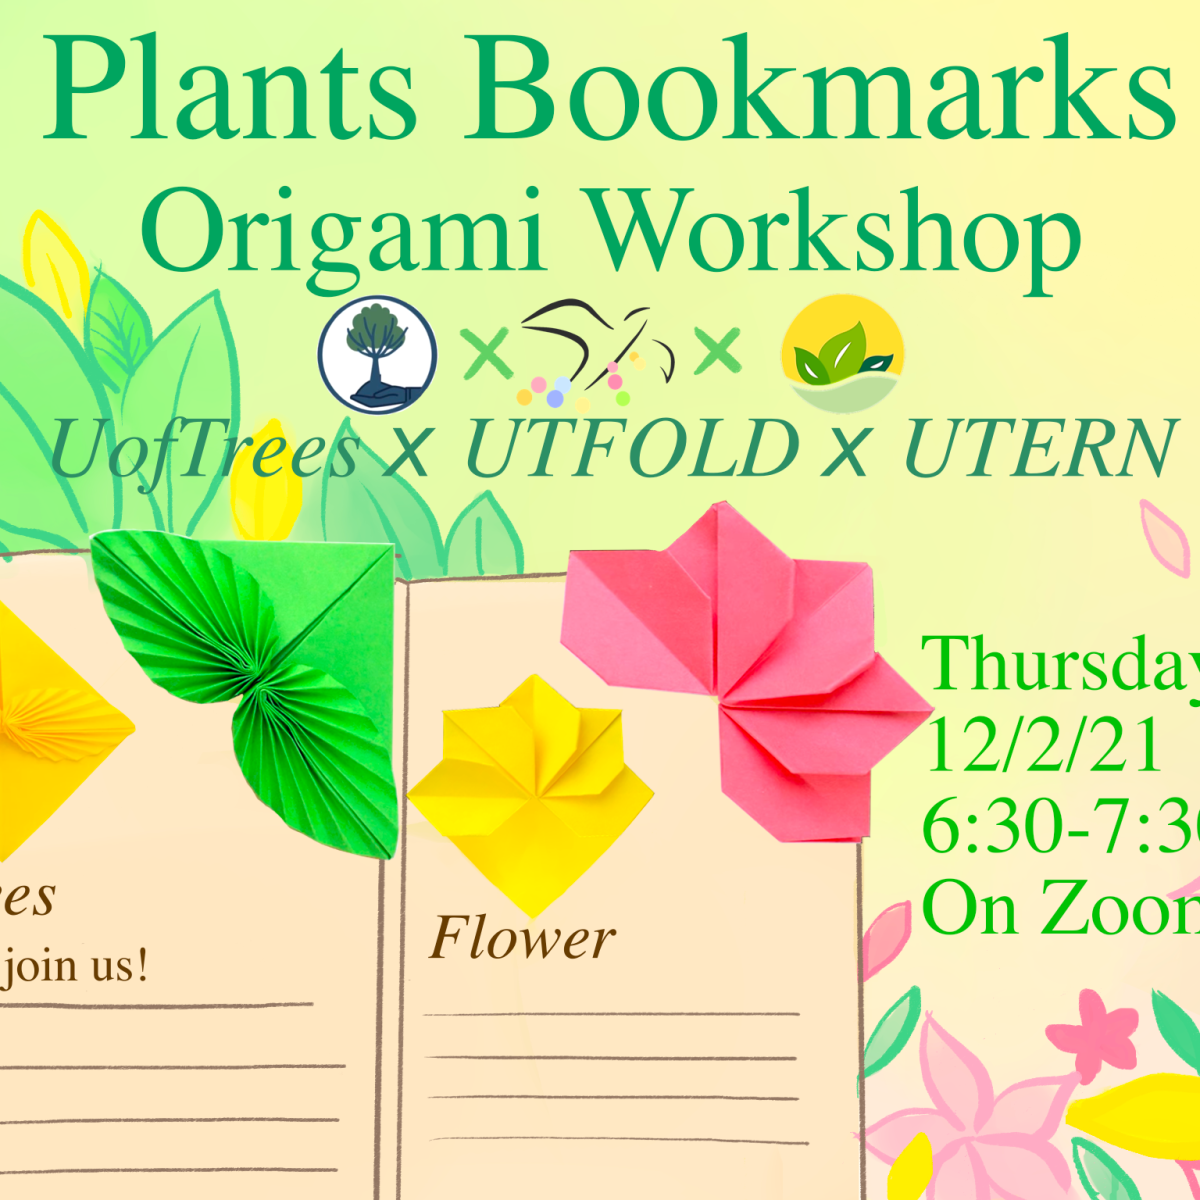 UofTrees 🌳x UTFOLD💮 x UTERN🍃 – Plant Bookmark Workshop🌱🌸